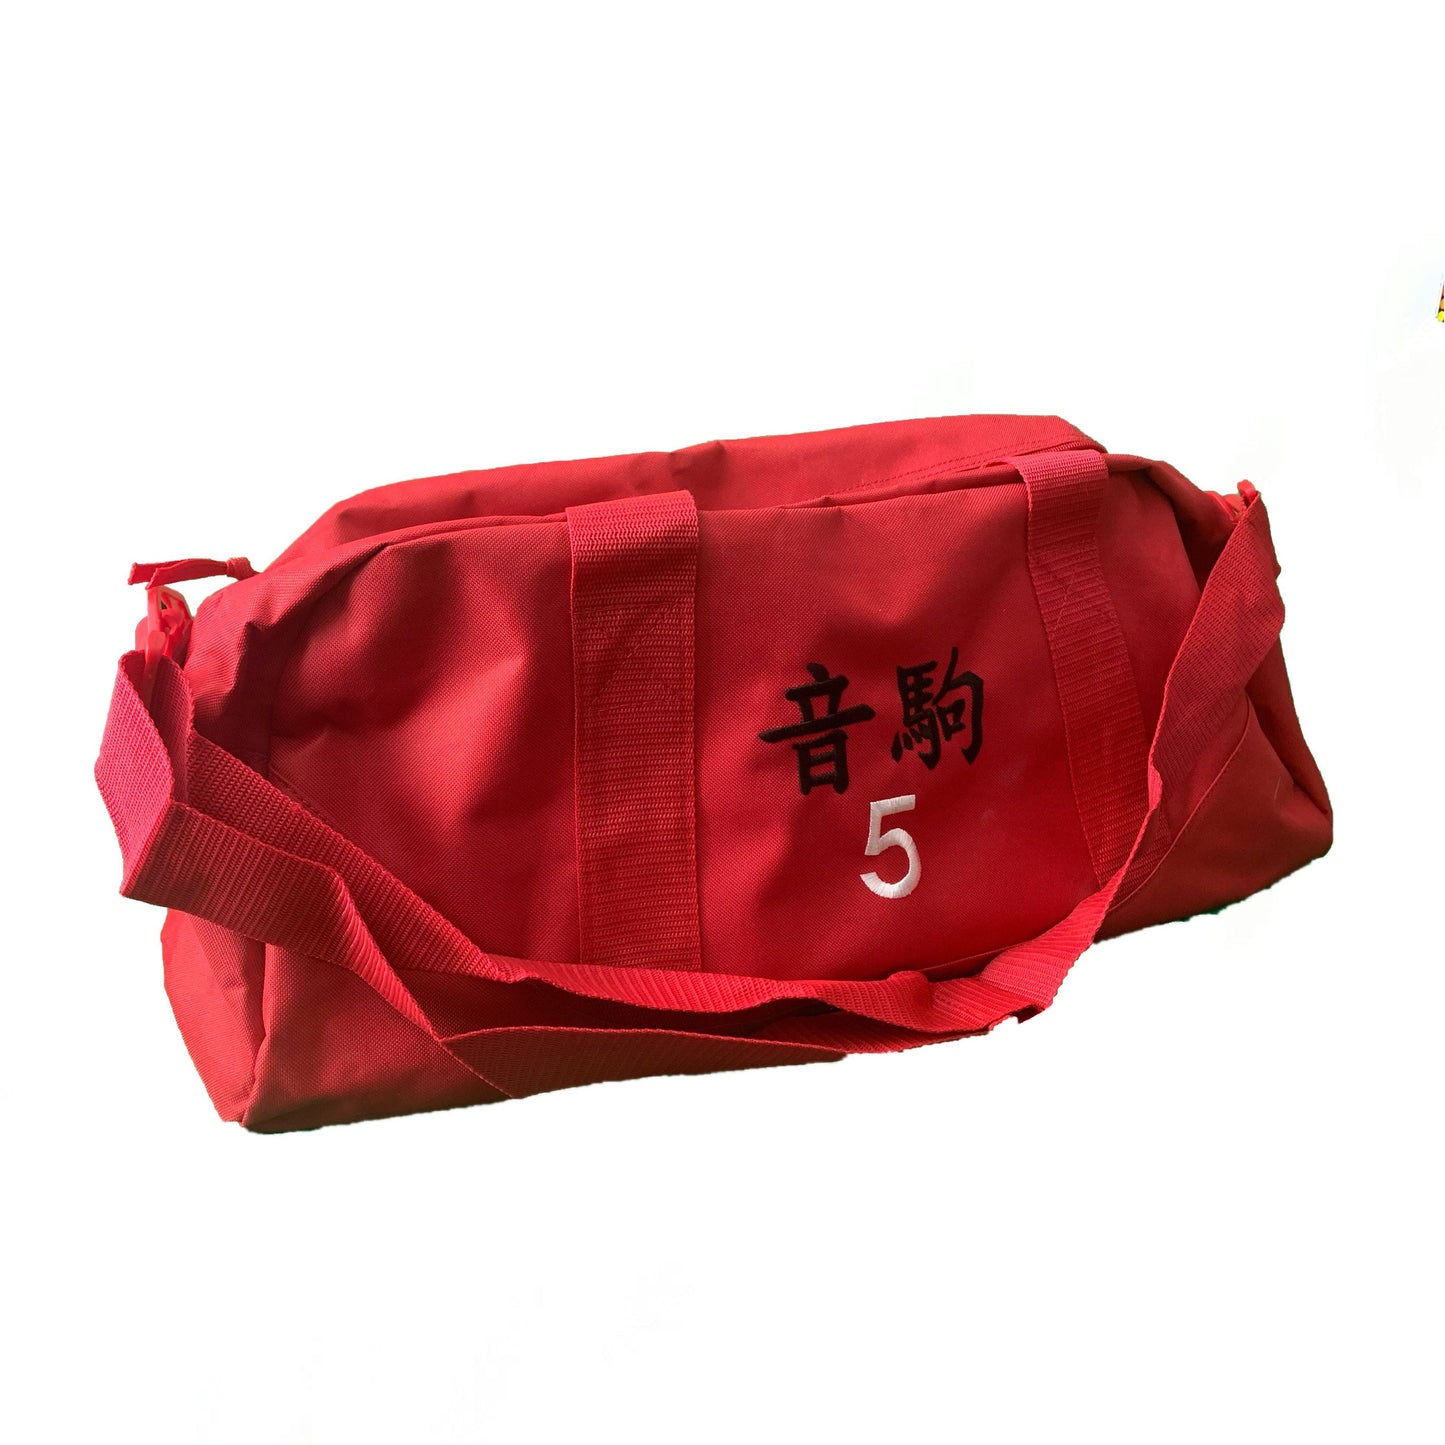 Kenma Kozume Nekoma Luggage Backpack Gym Bag Duffel Kuroo Tetsurou